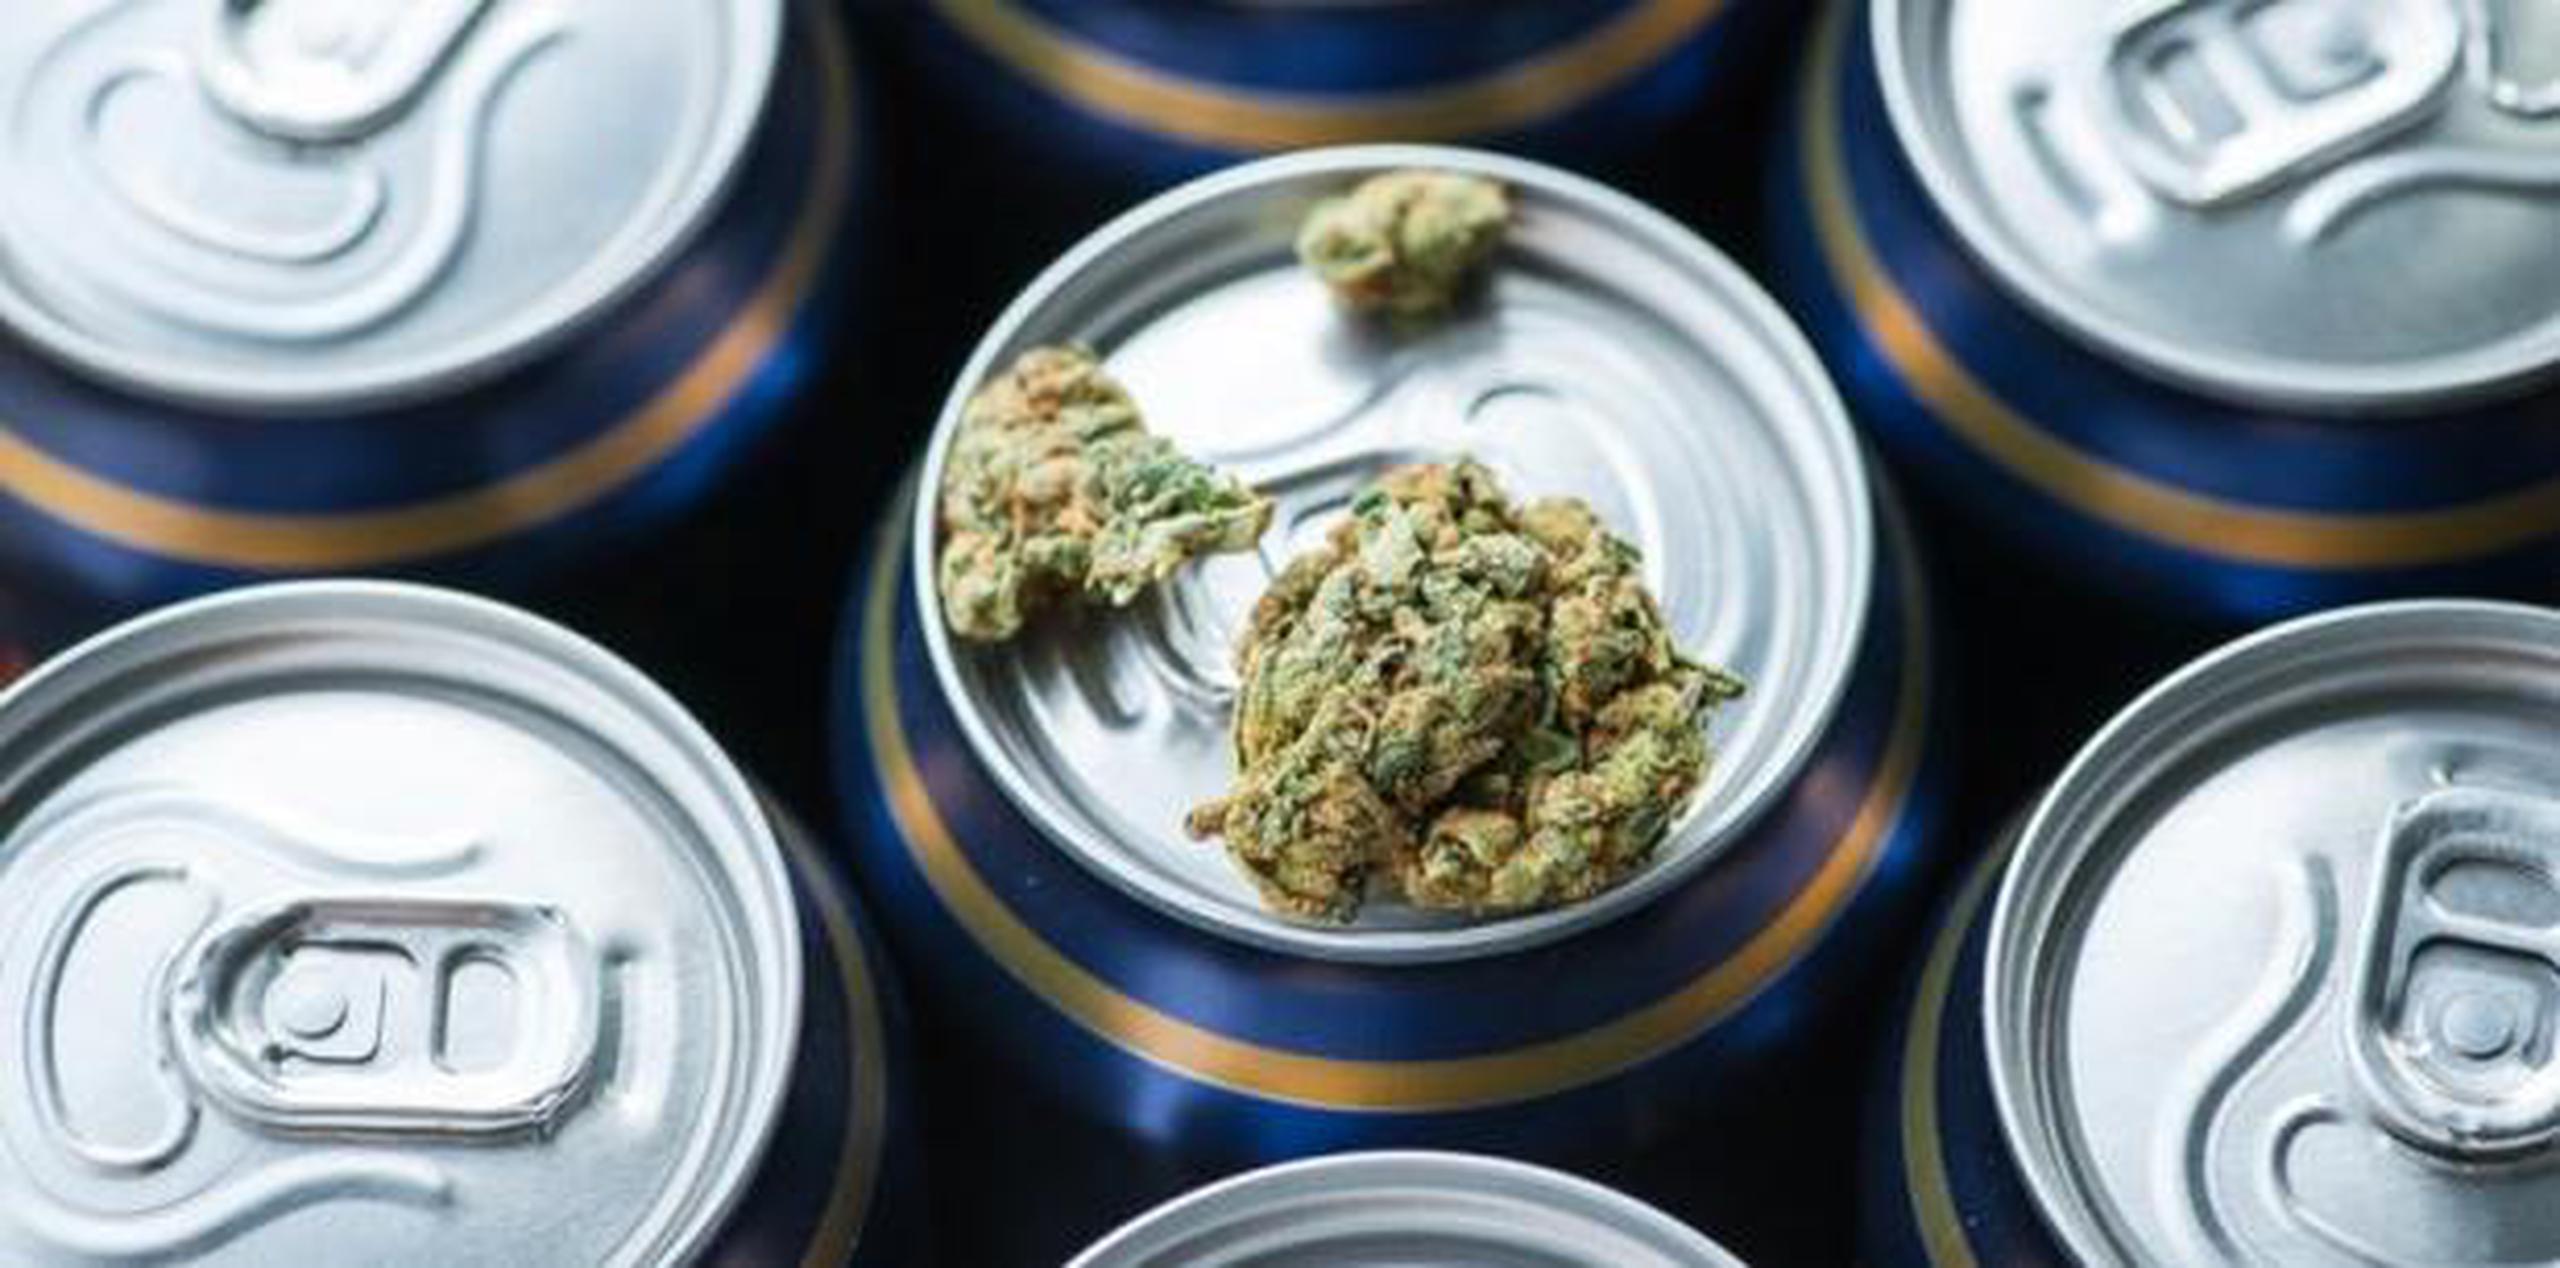 Anheuser-Busch dijo en diciembre que se asociaría con el fabricante de cannabis medicinal Tilray Inc. para desarrollar bebidas sin alcohol con cannabis. (AP / Richard Vogel / Archivo)